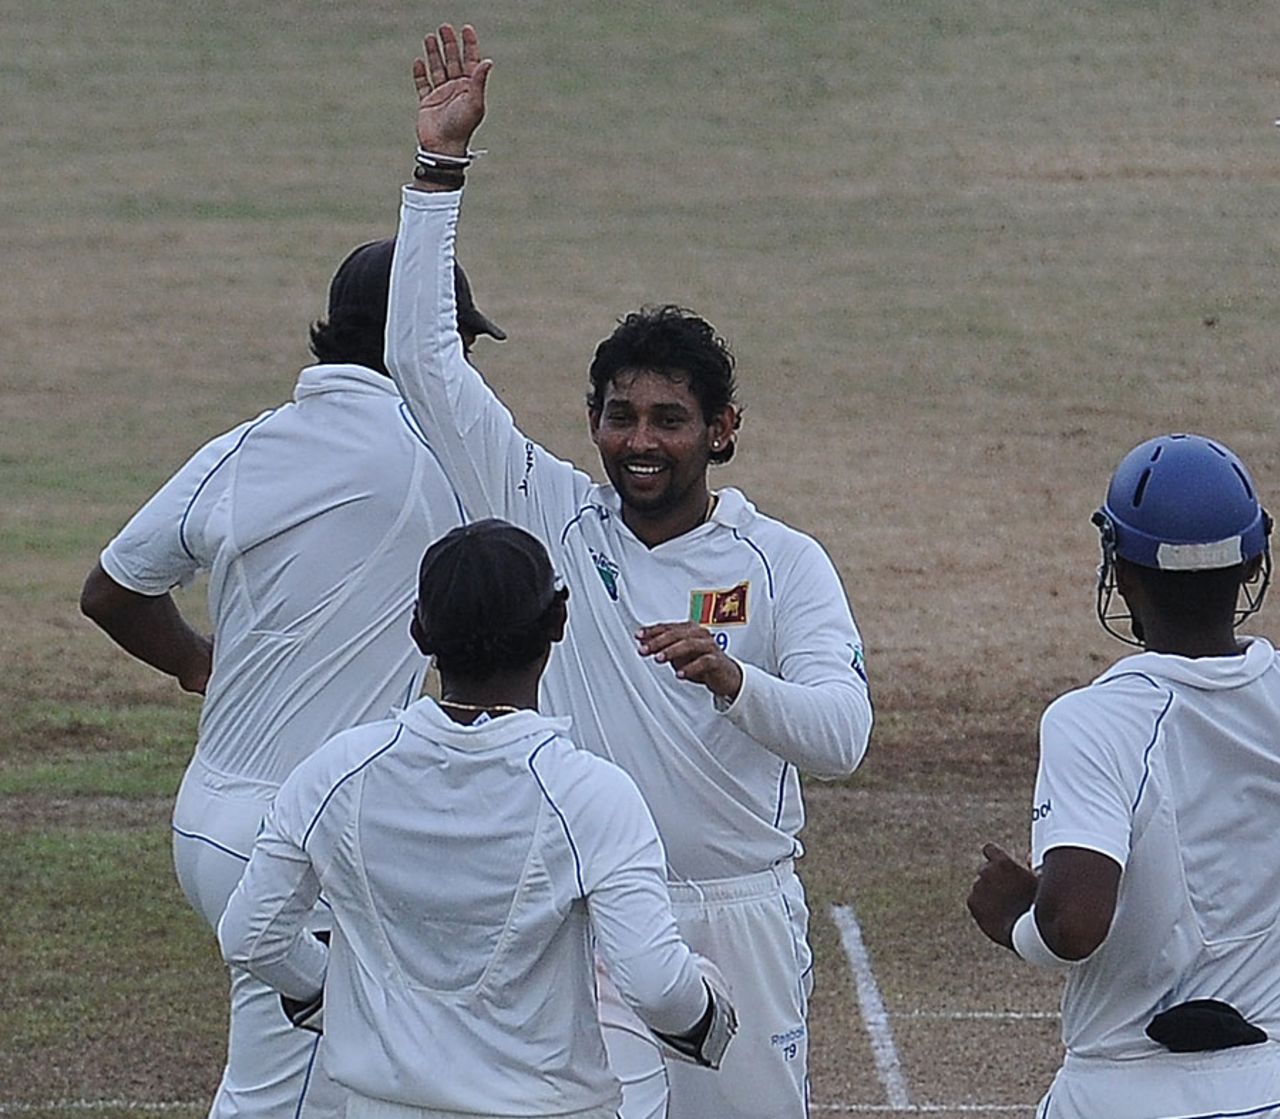 Tillakaratne Dilshan celebrates dismissing Chris Gayle, Sri Lanka v West Indies, 2nd Test, Premadasa Stadium, Colombo, 5th day, November 27, 2010